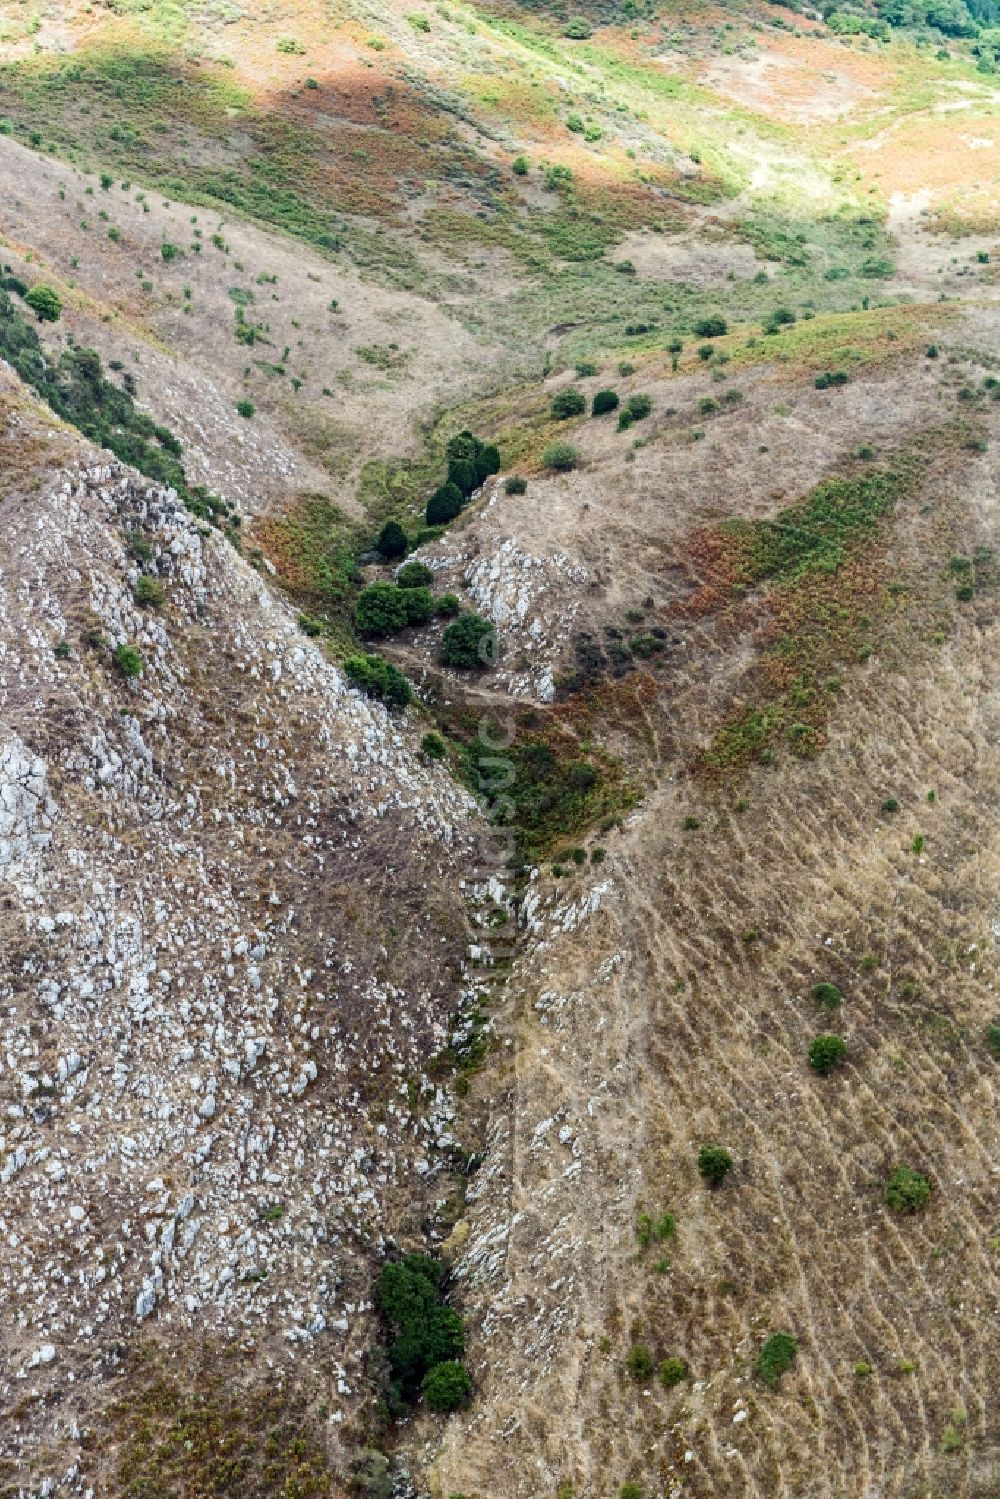 Luftbild Sizilien - Heidelandschaft im Gebirgszug des Nebrodi National Park in Sizilien in Italien